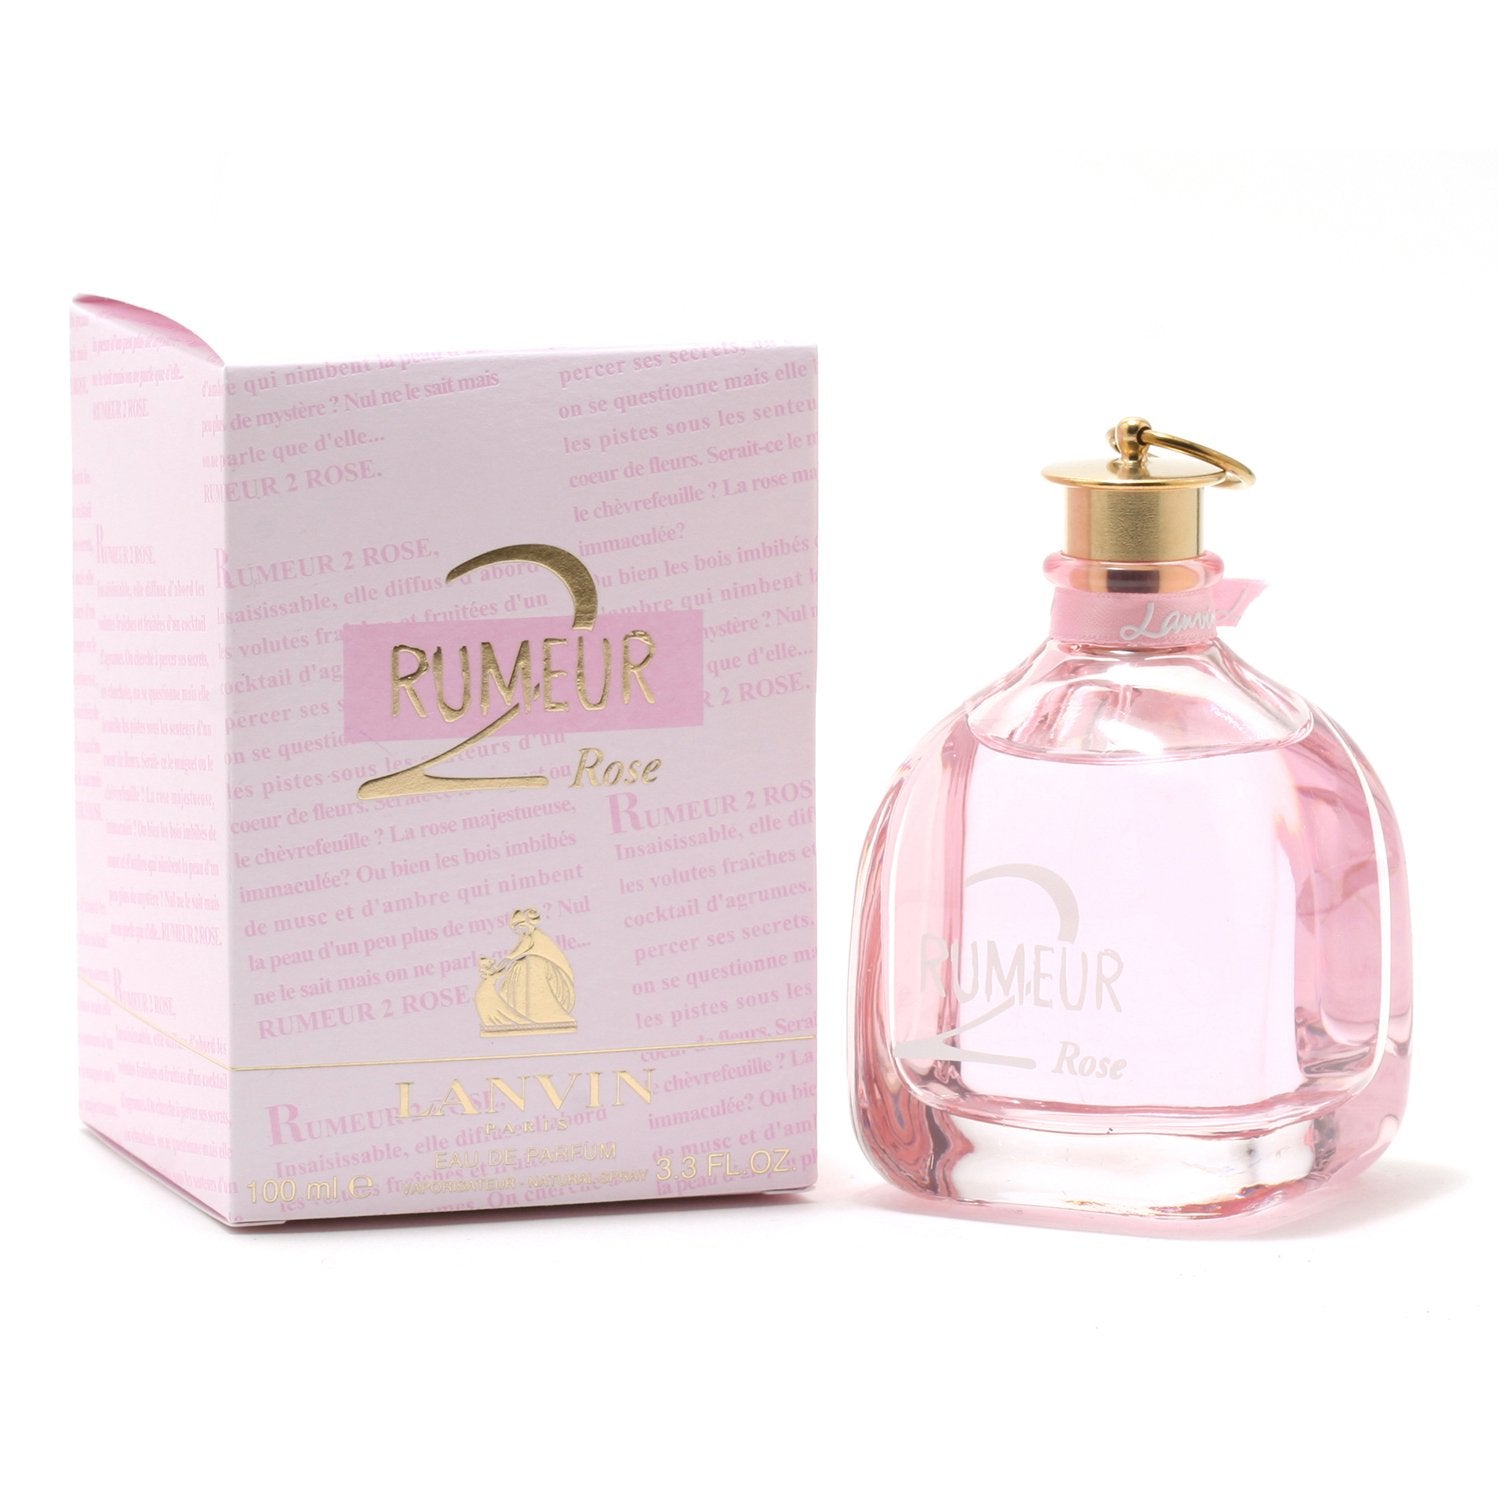 Perfume - RUMEUR 2 ROSE FOR WOMEN BY LANVIN - EAU DE PARFUM SPRAY, 3.3 OZ